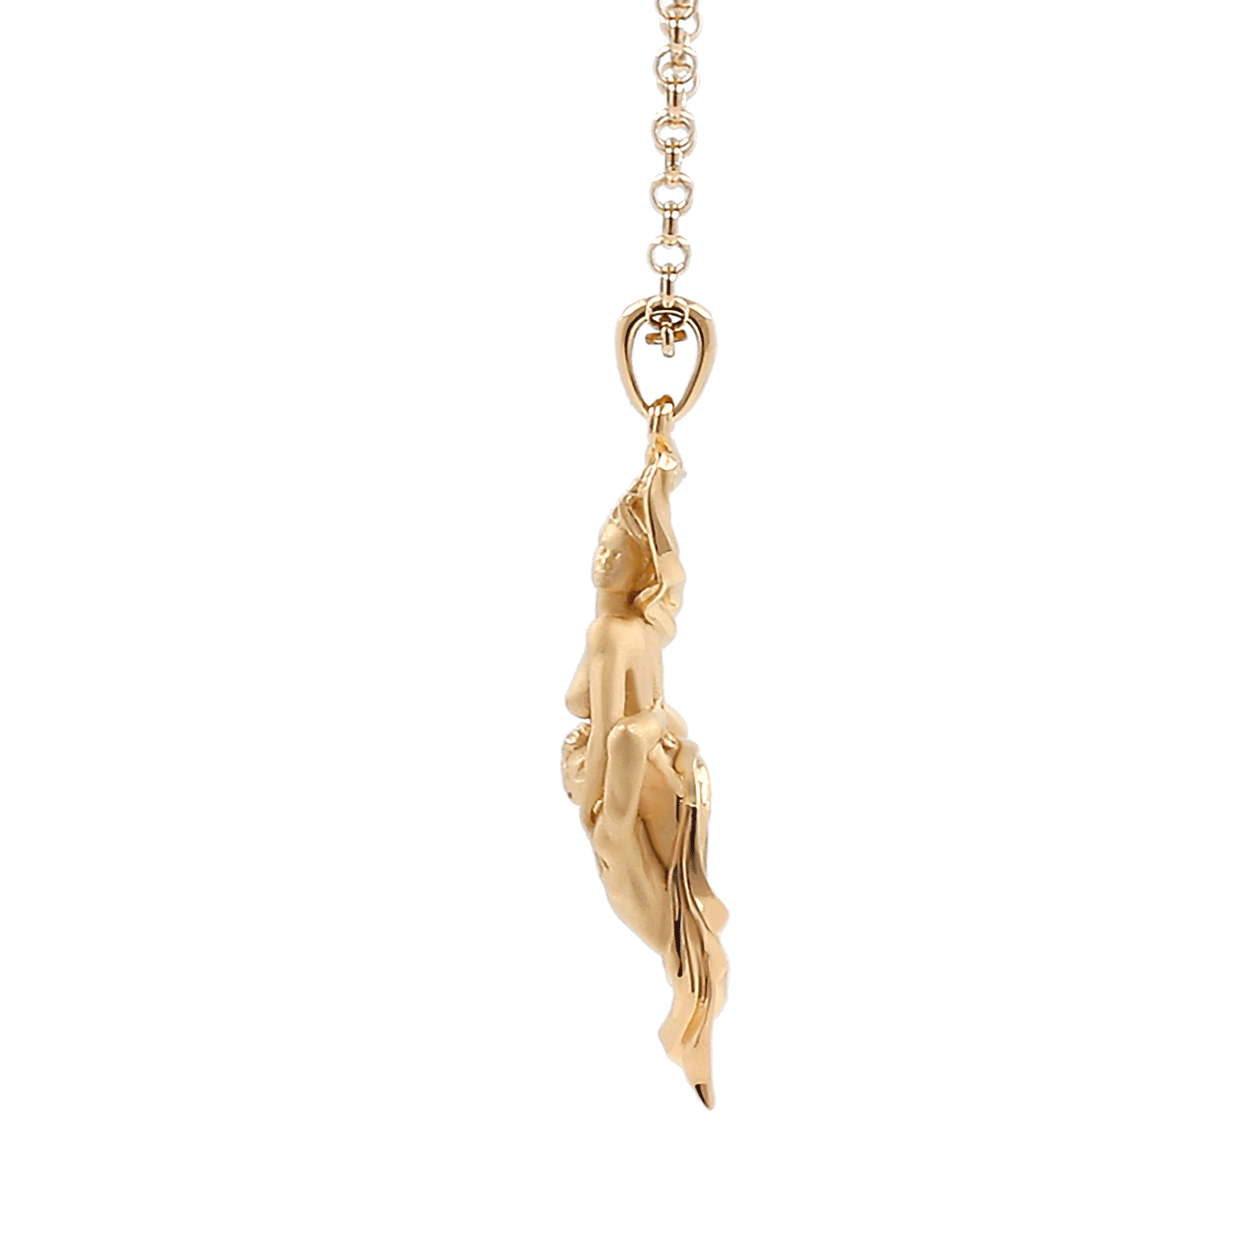 Gold Necklace “WISH” - Manuel Carrera Cordon